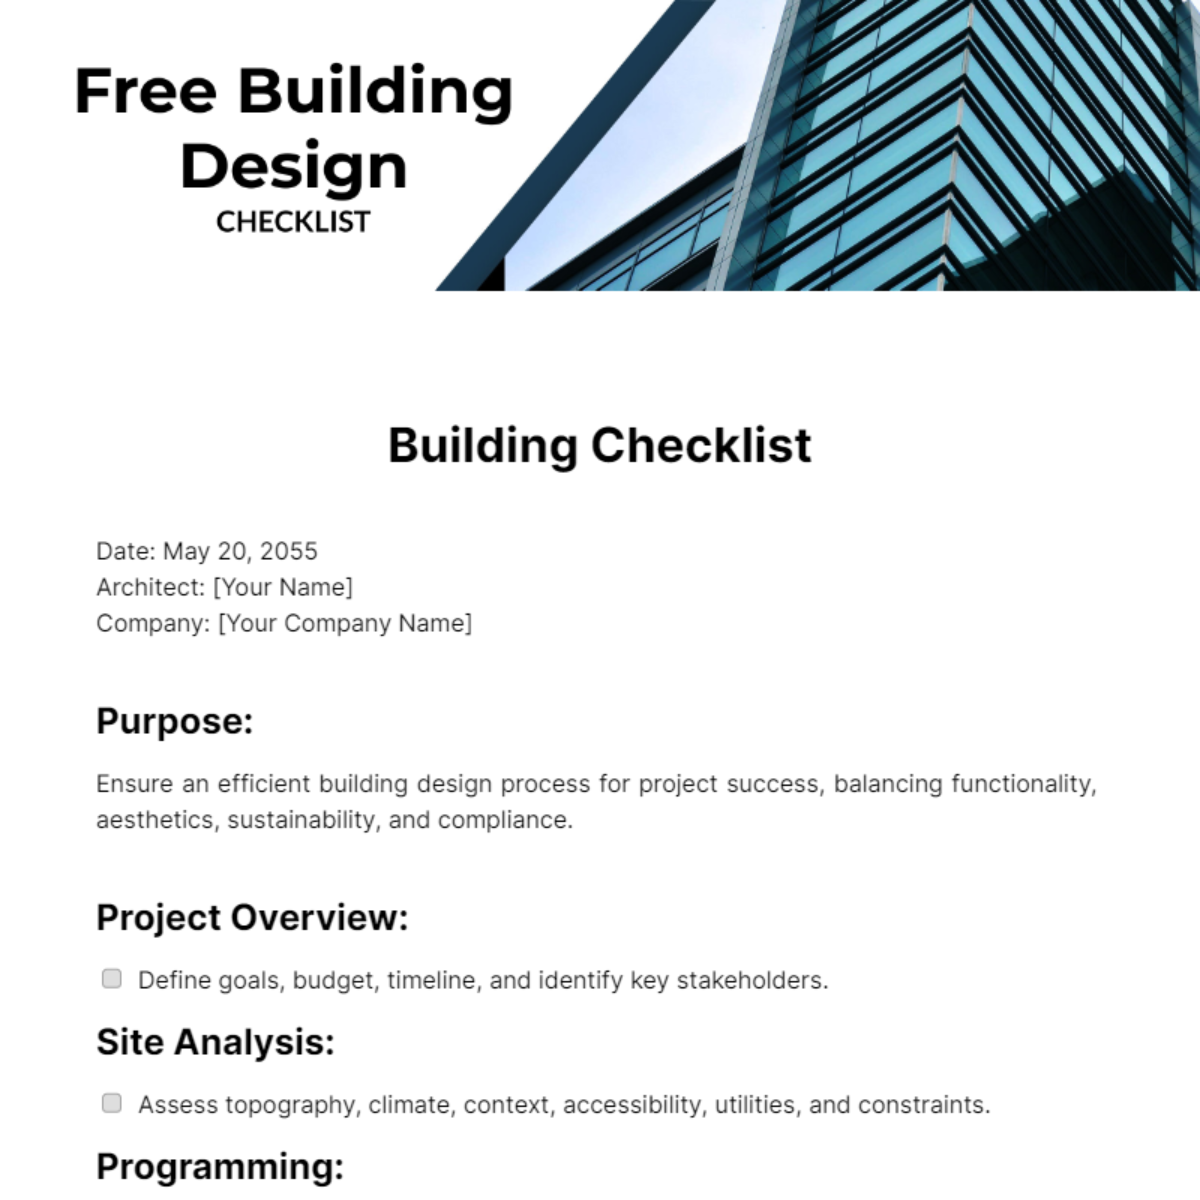 Free Building Design Checklist Template